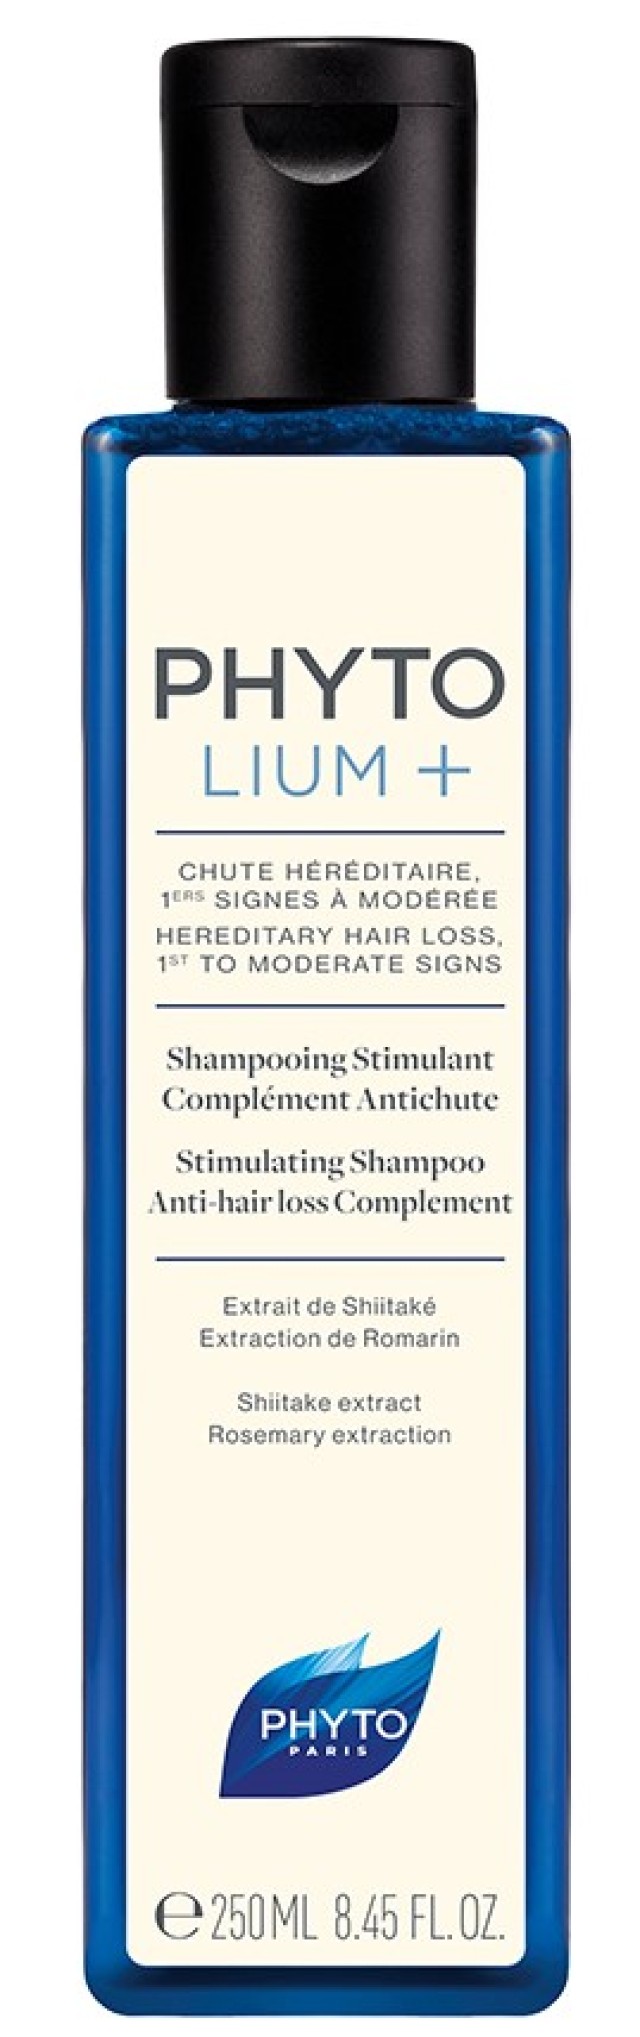 Phyto Phytolium+ Stimulating Anti-hair loss Shampoo 250ML